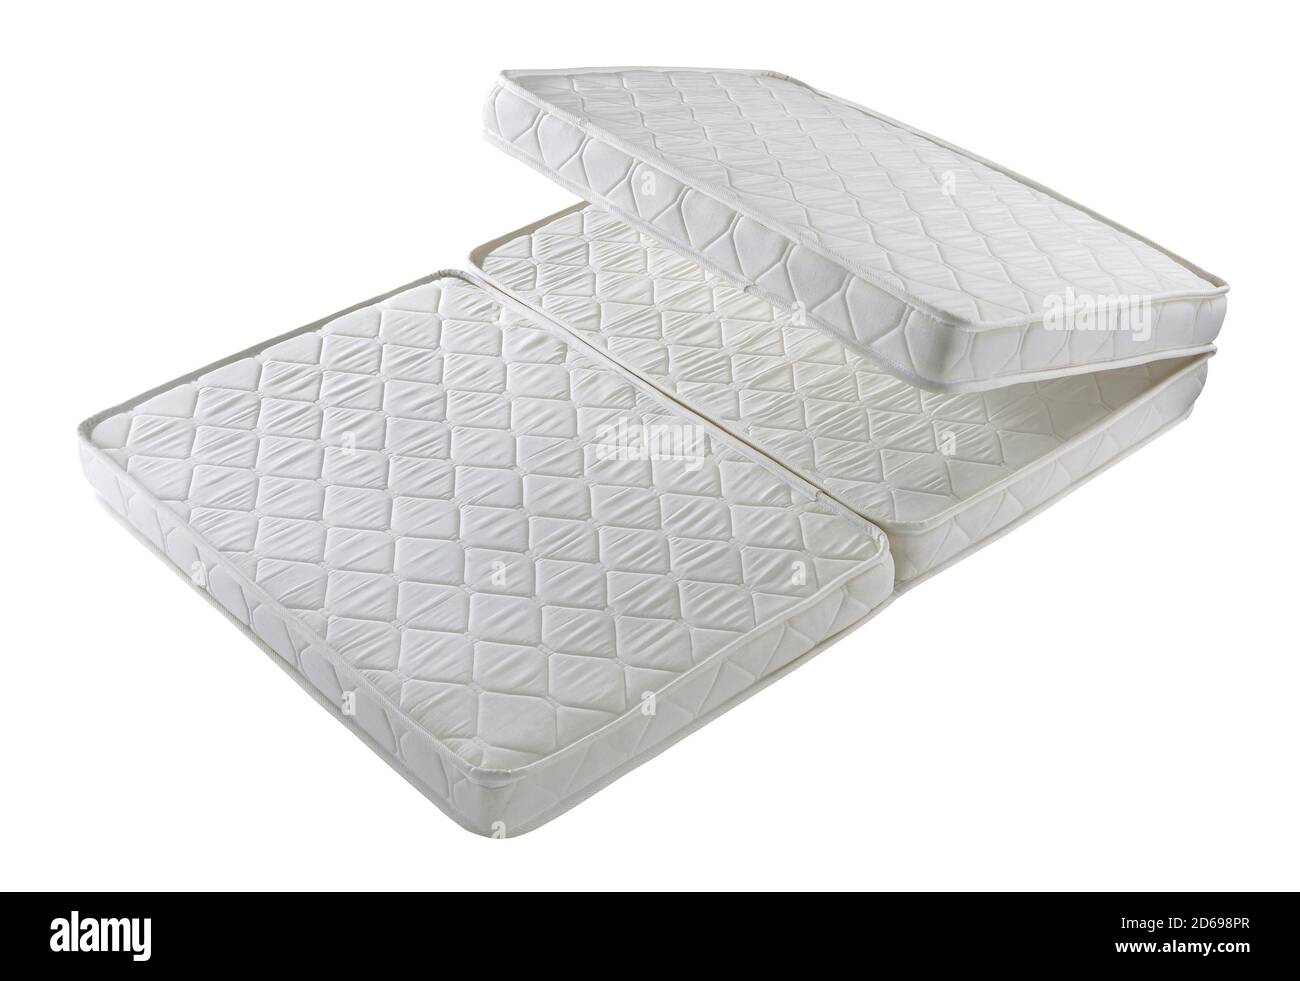 Foldable mattress isolated on white background Stock Photo